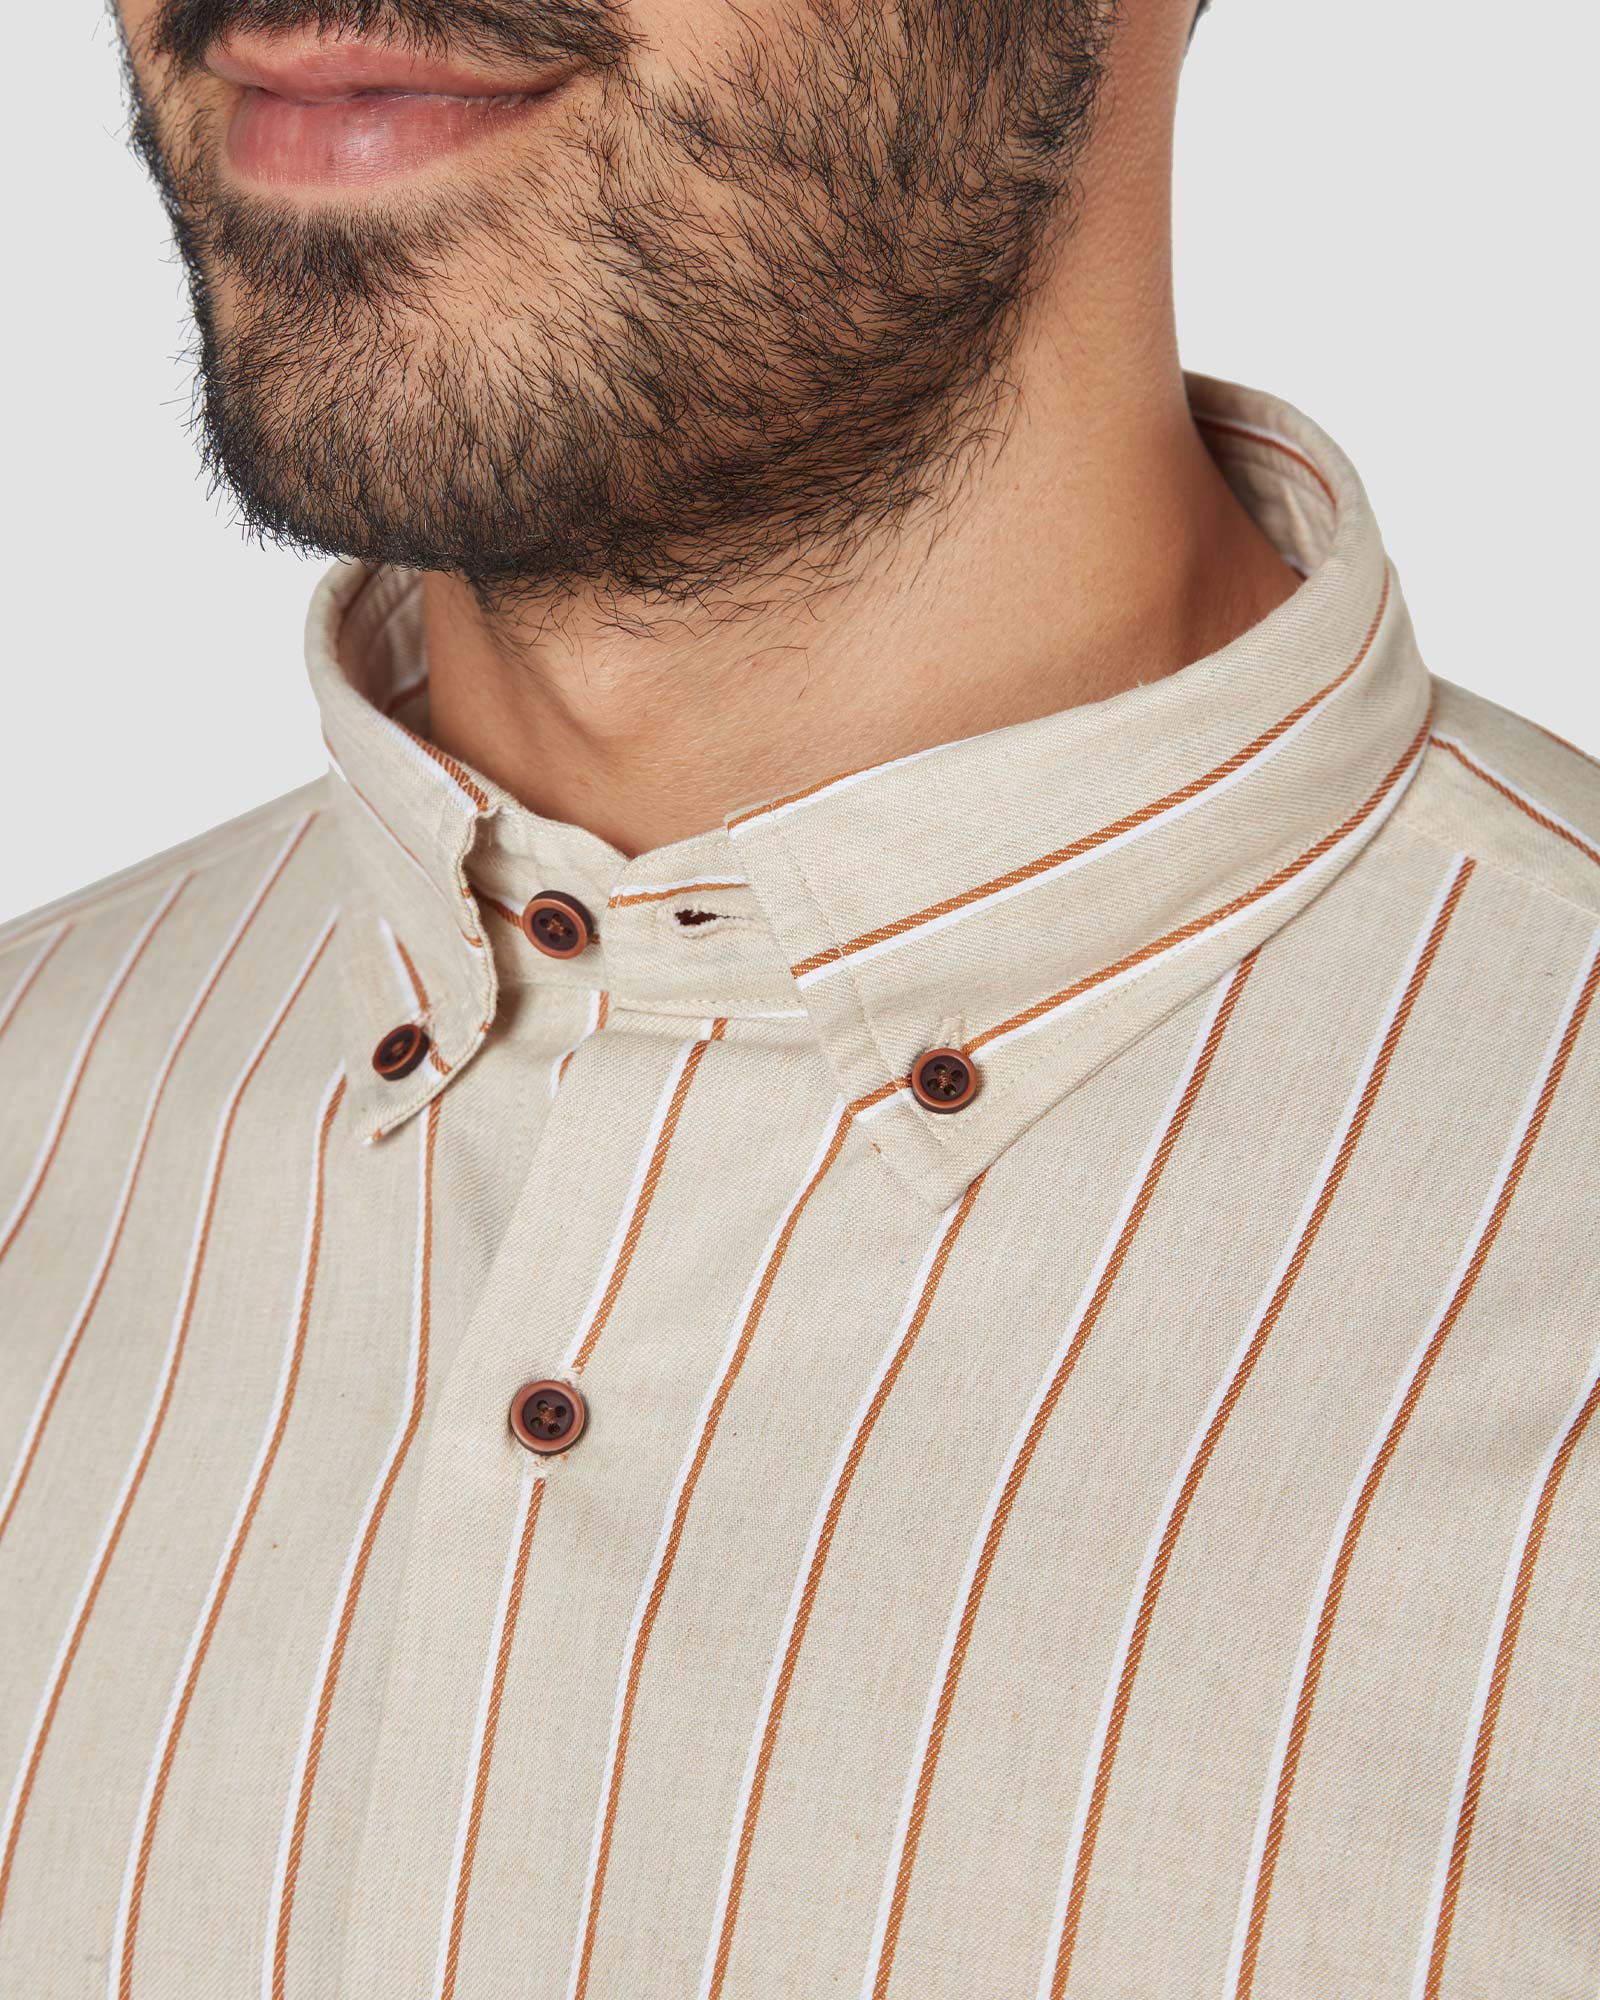 Bombay Shirt Company - Latte Time Stripes